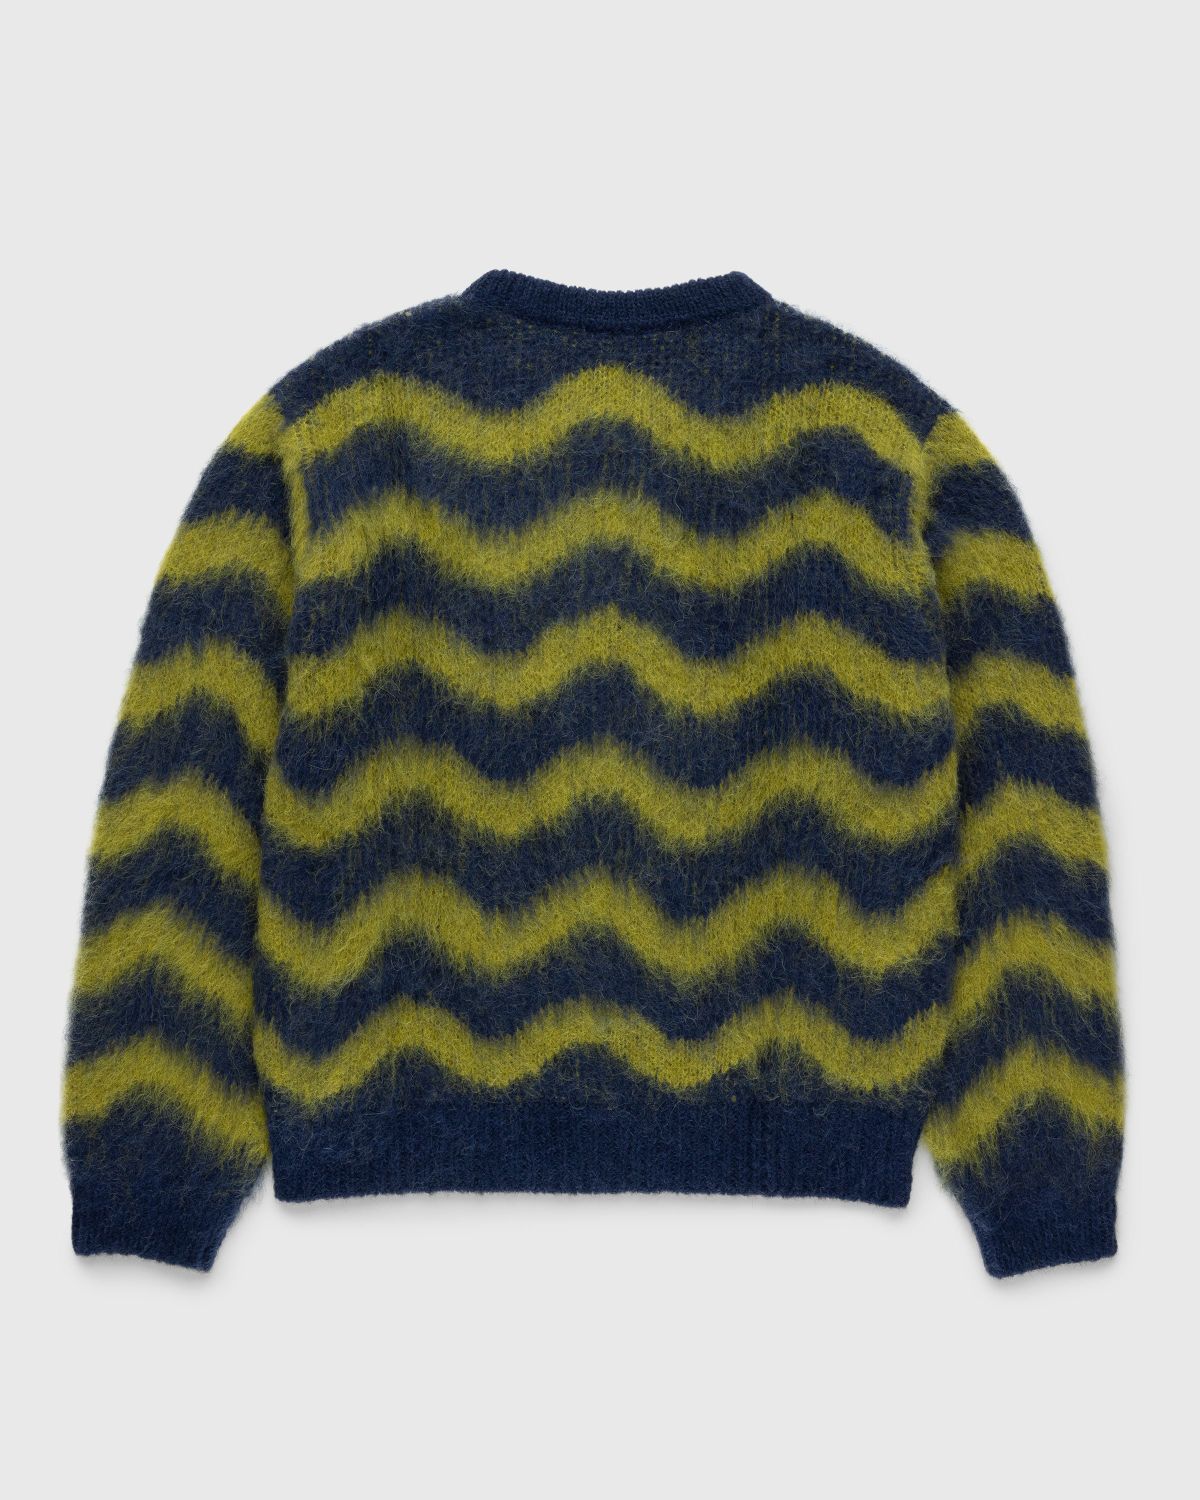 Highsnobiety HS05 – Alpaca Fuzzy Wave Sweater Navy/Olive Green - Knitwear - Multi - Image 2